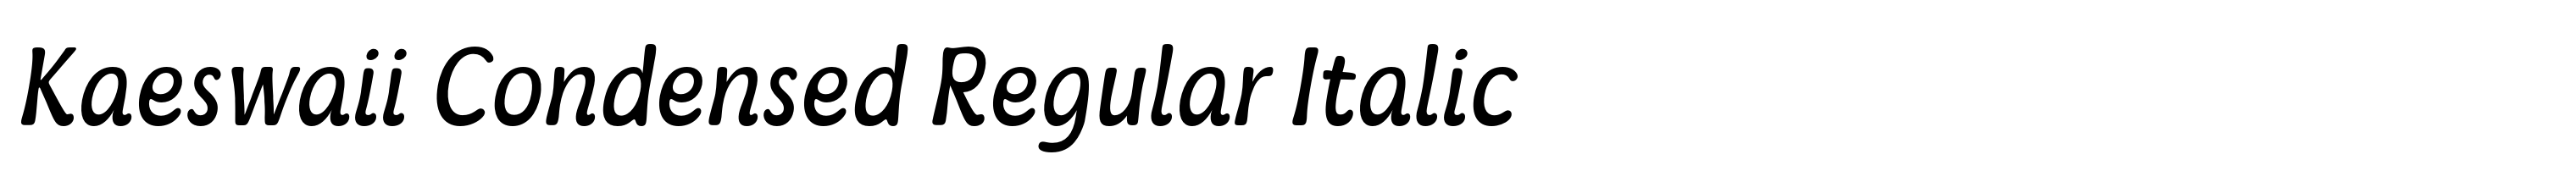 Kaeswaii Condensed Regular Italic